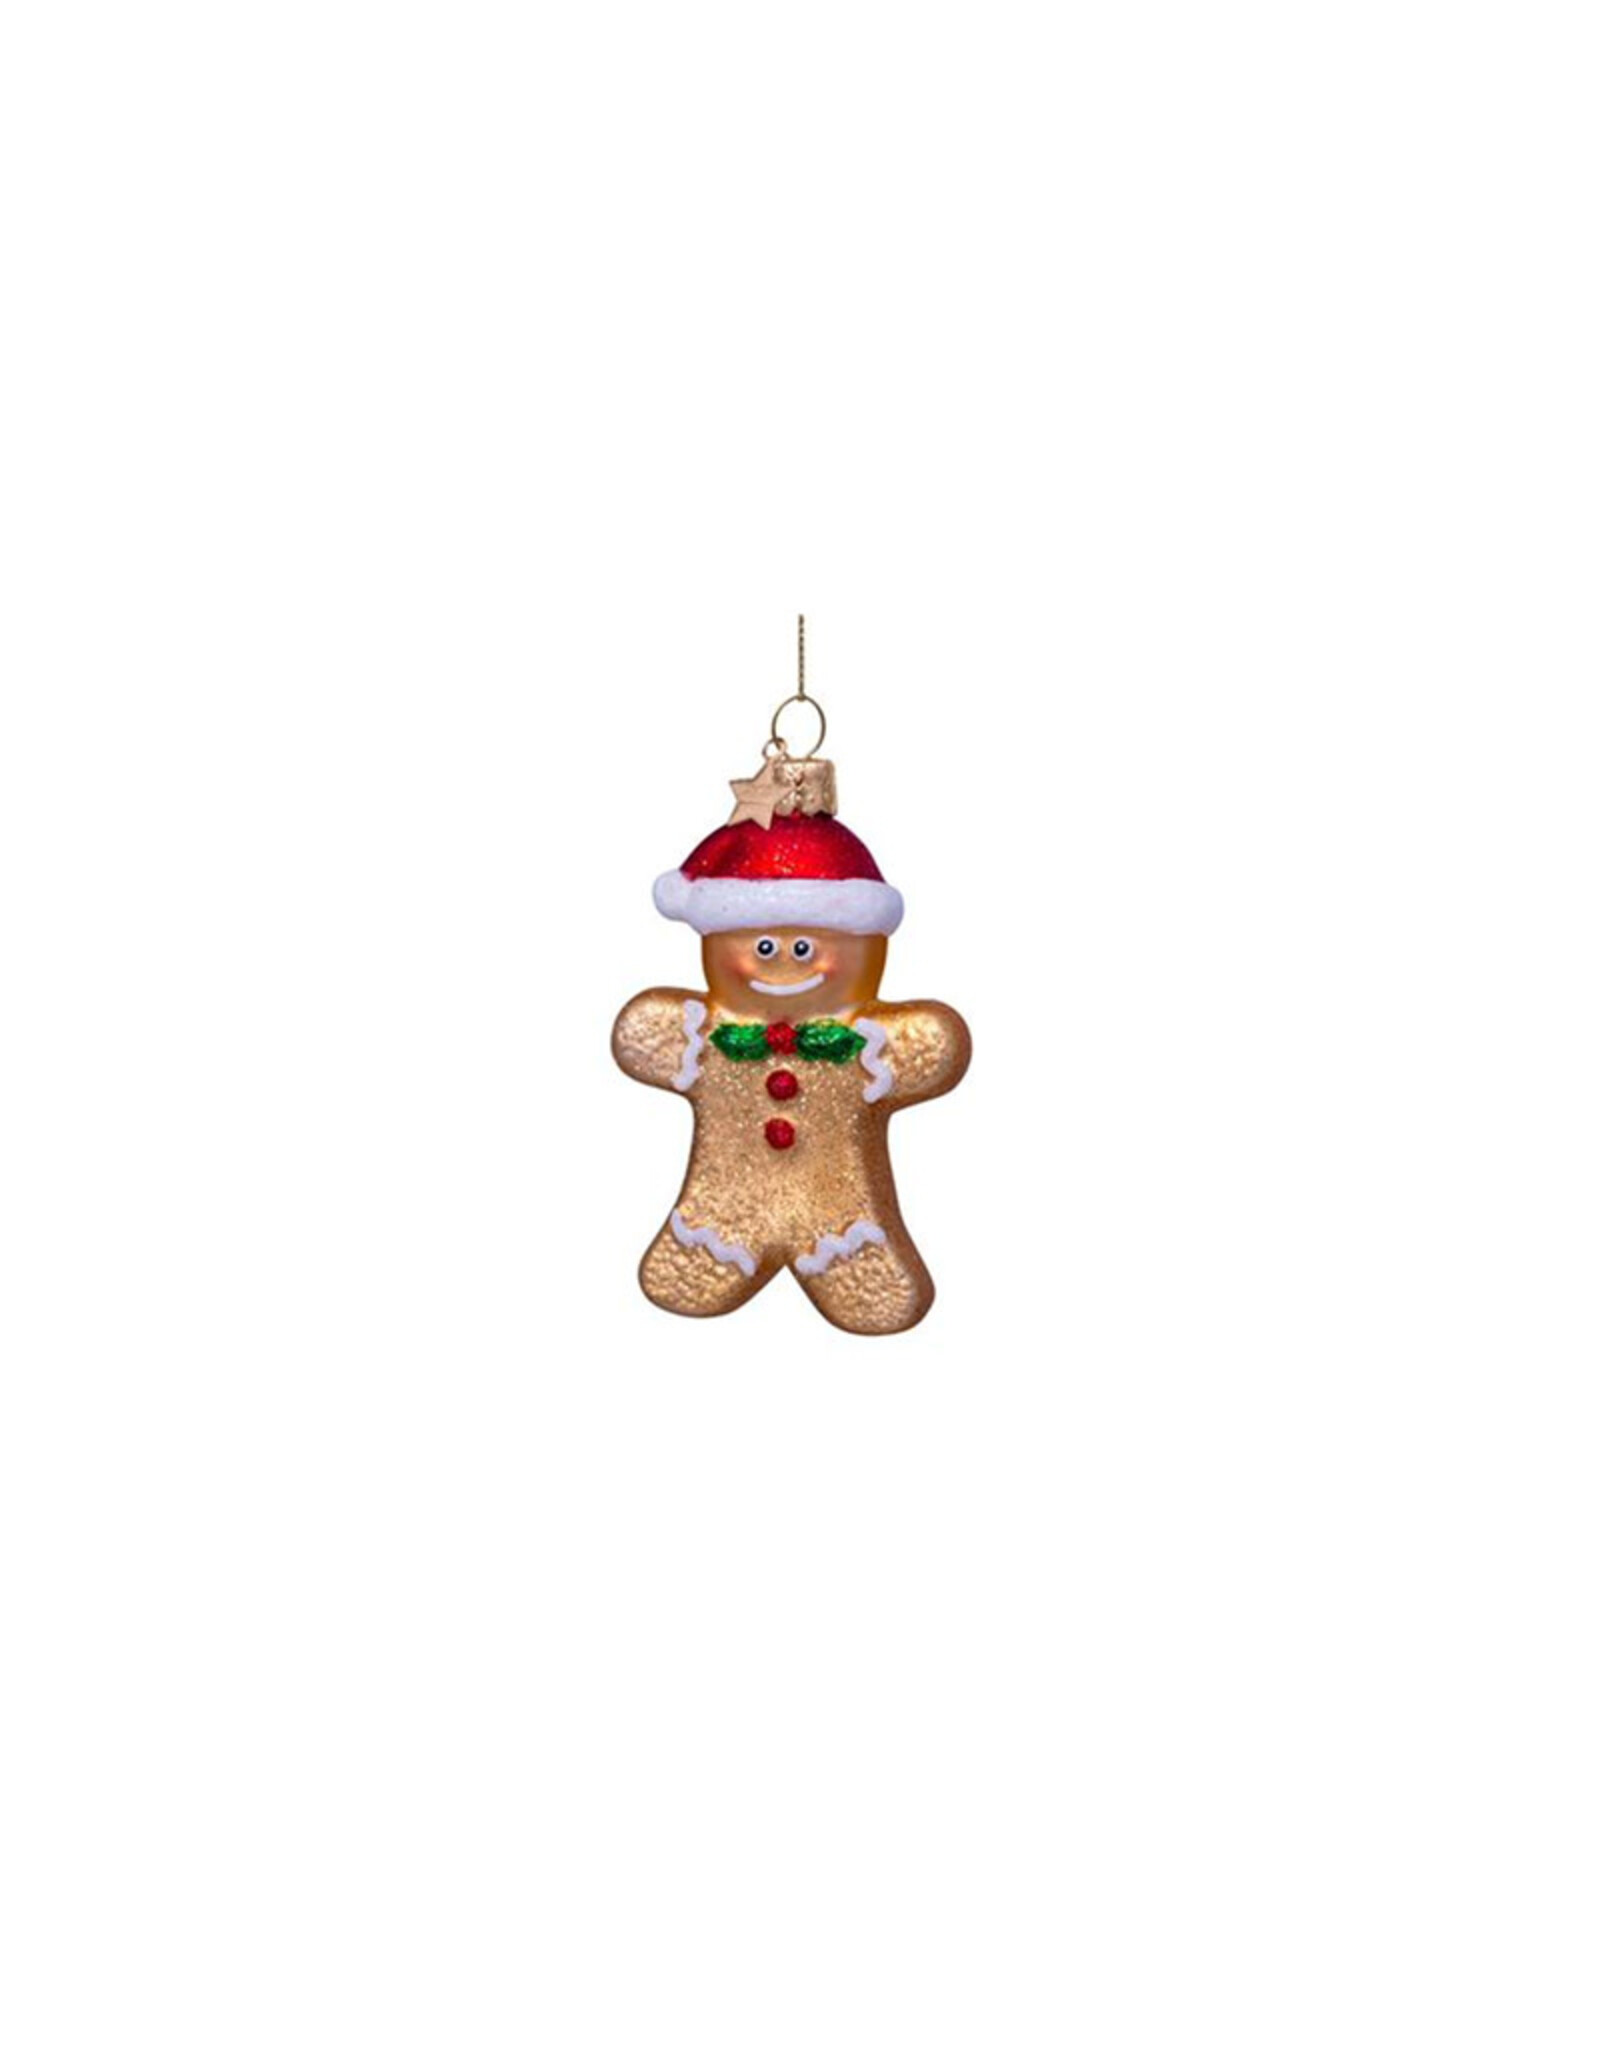 Vondels Glass Ornament - Gingerbread Cookie